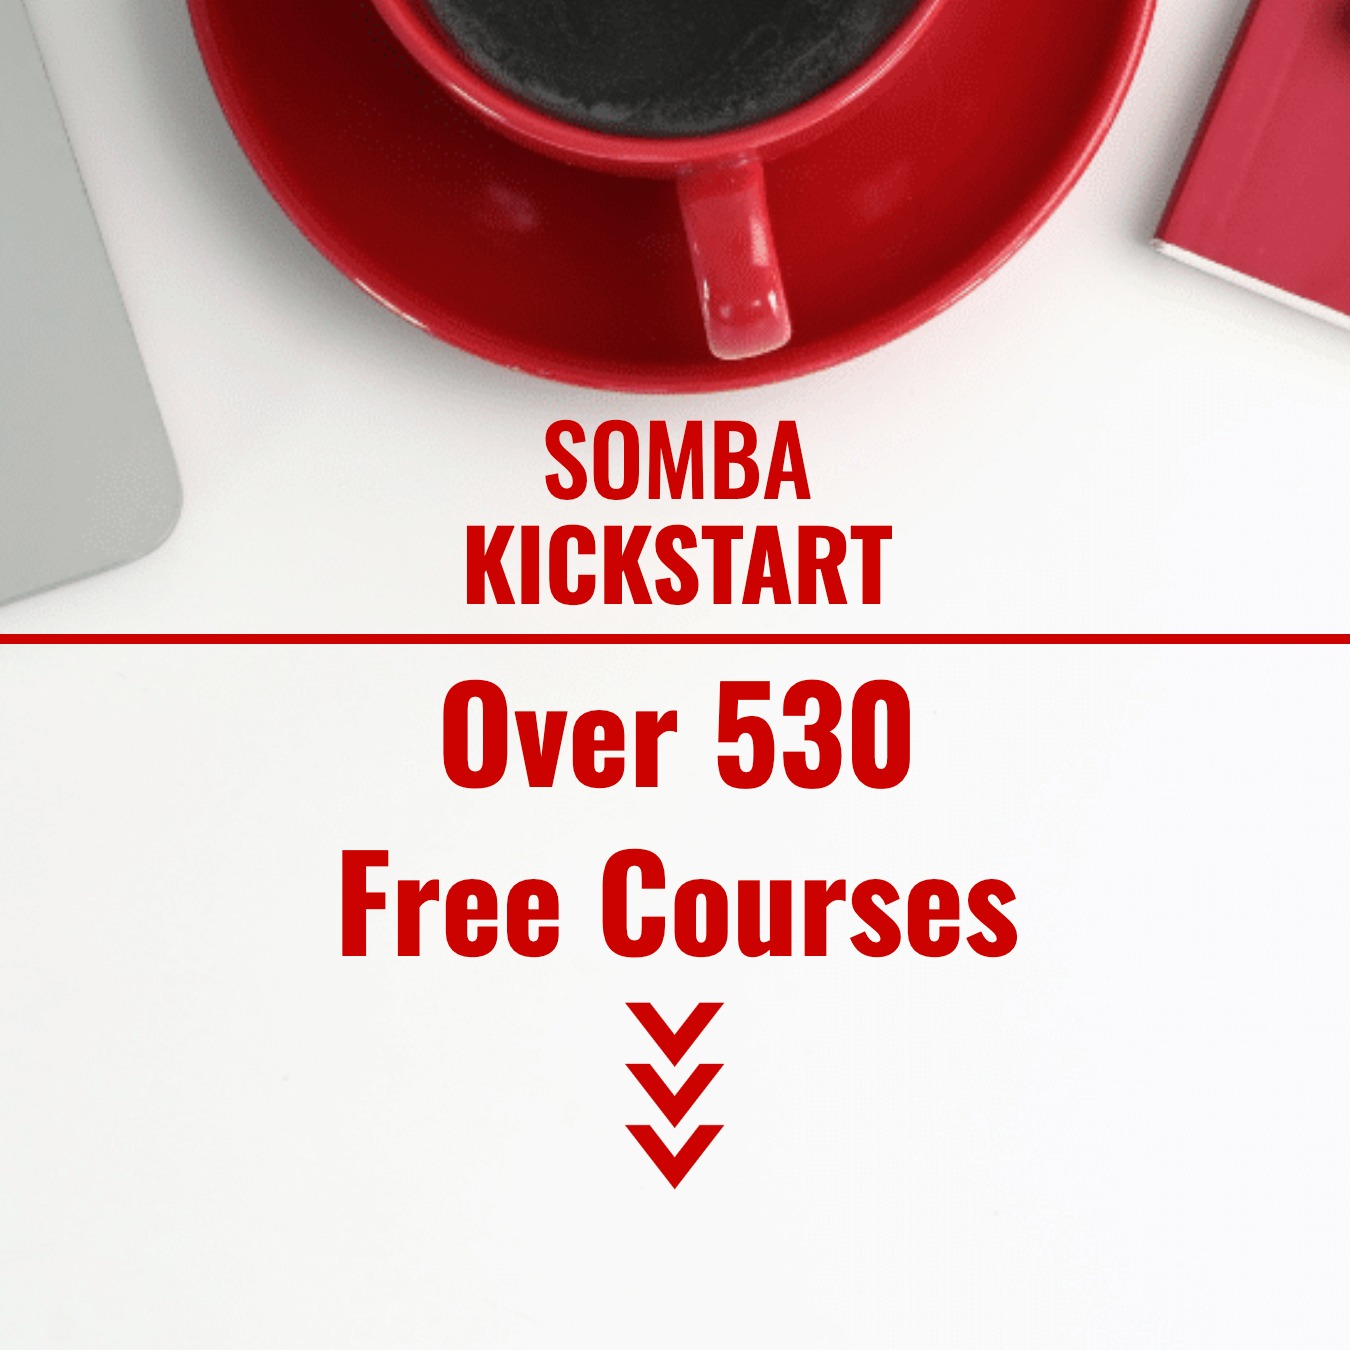 530 free courses - SOMBA Kickstart